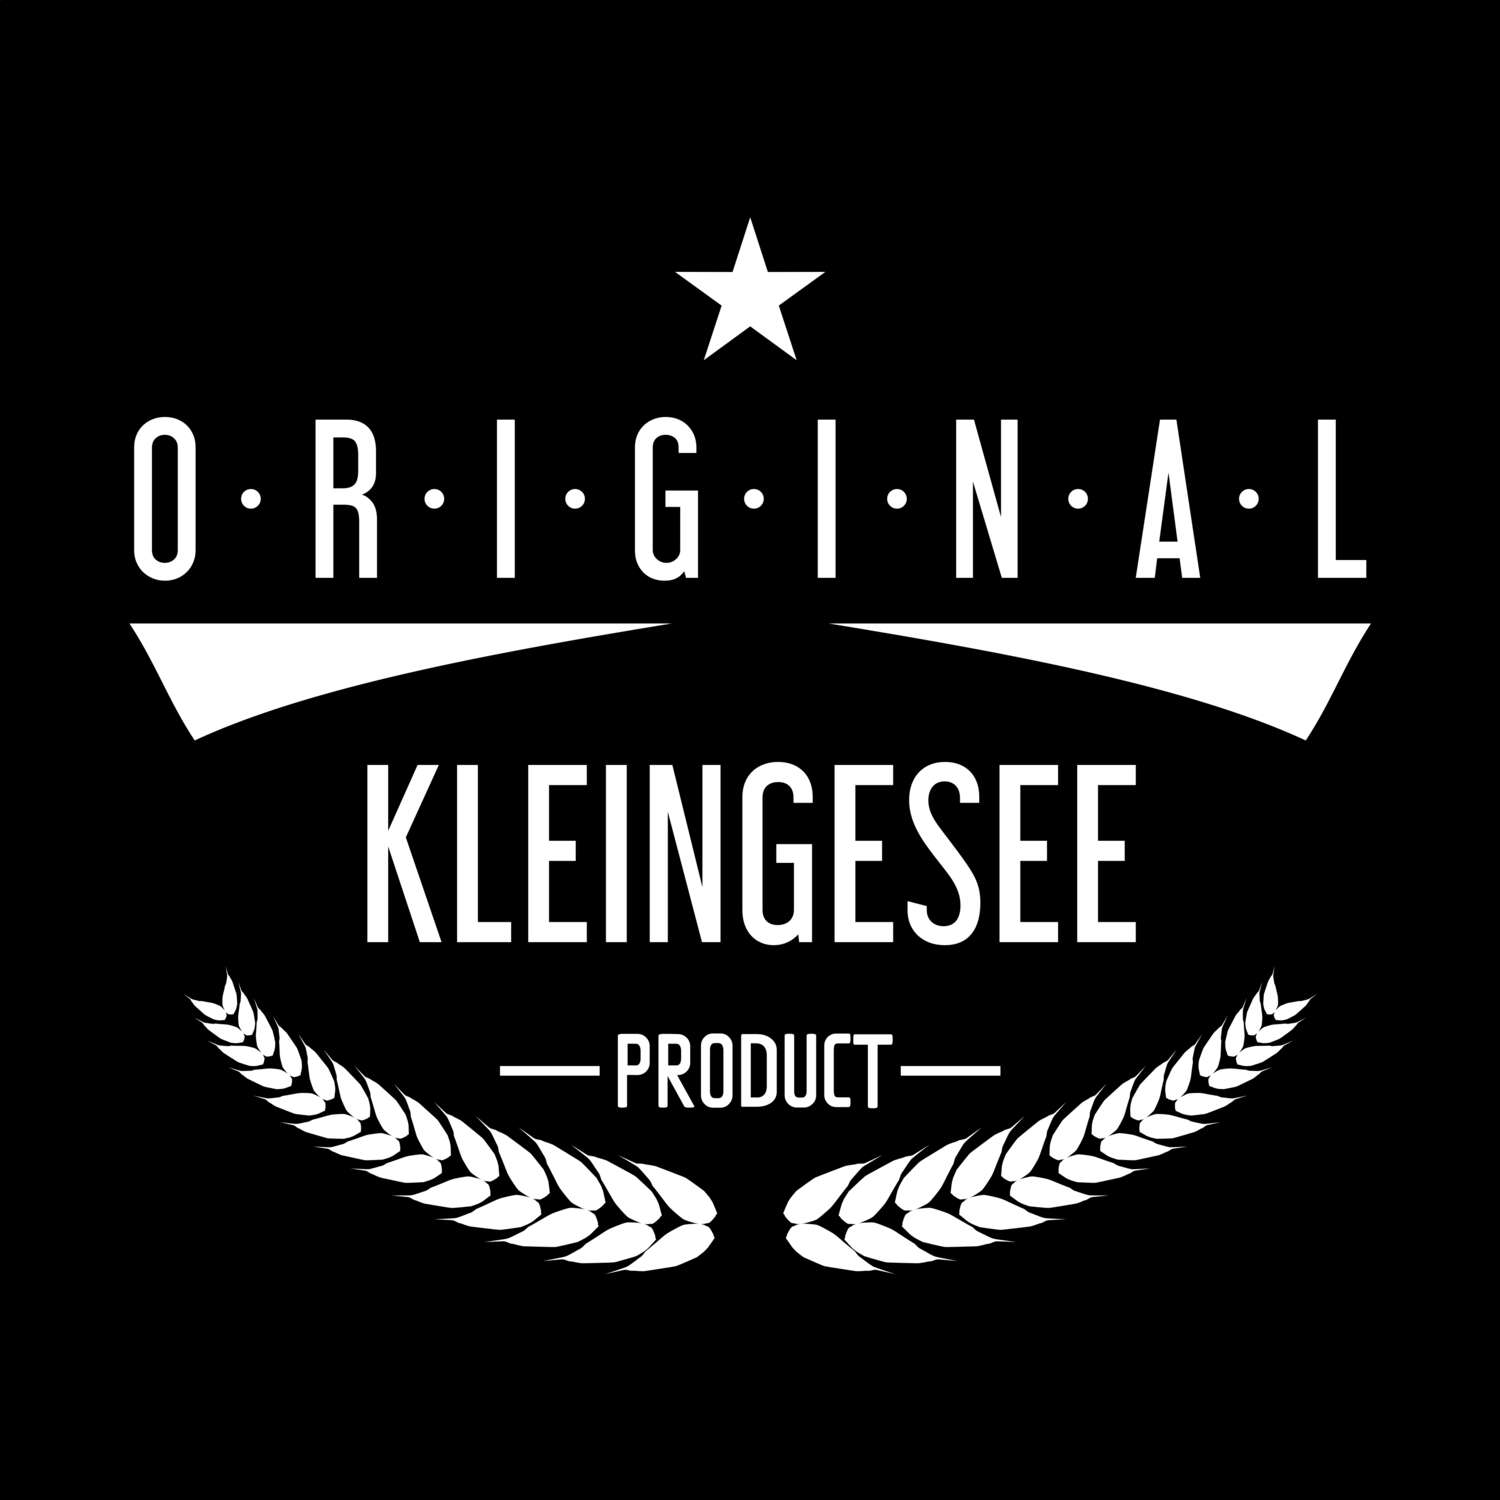 Kleingesee T-Shirt »Original Product«